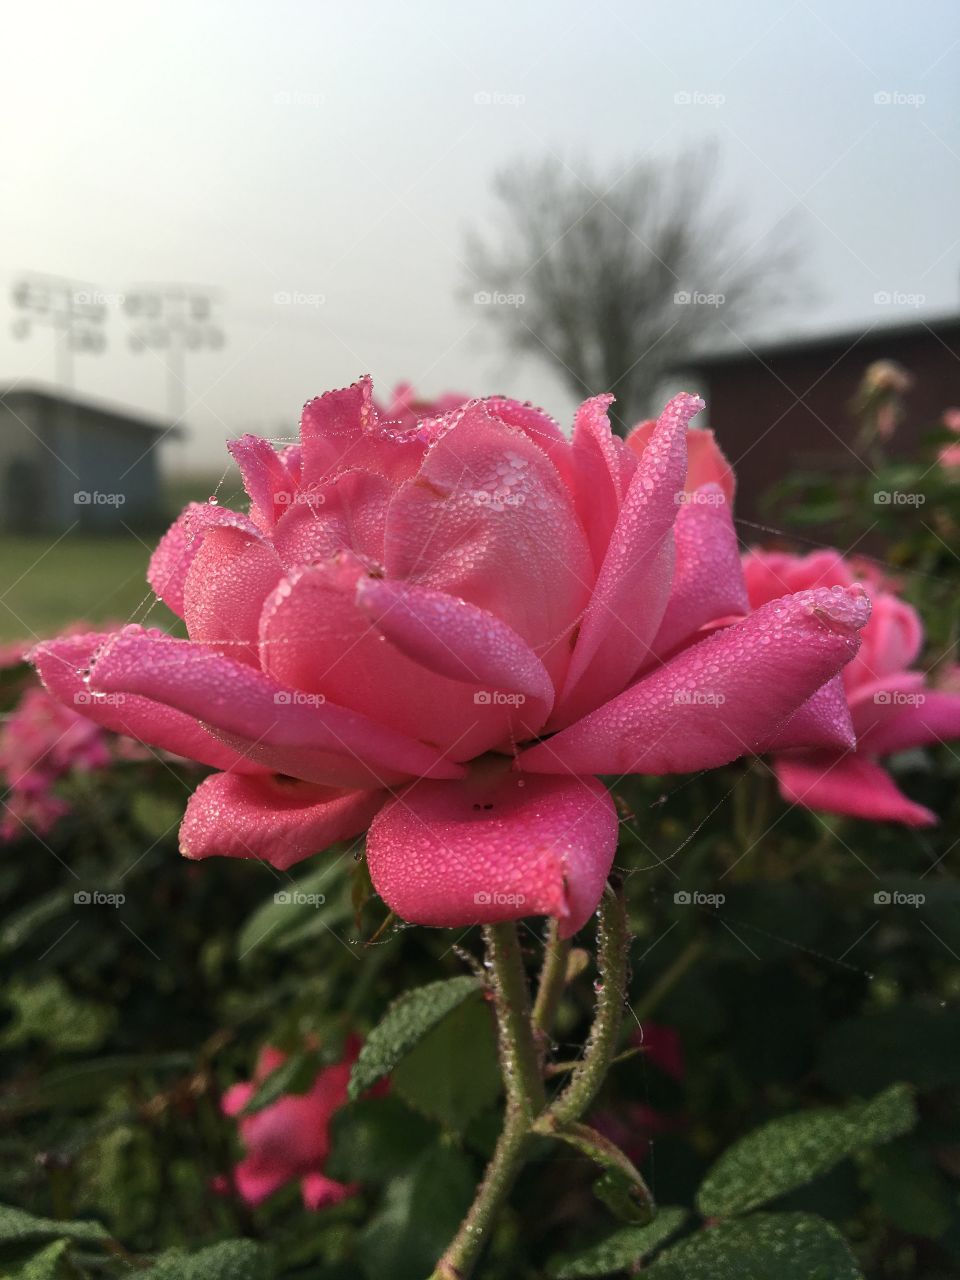 Dewy pink rose